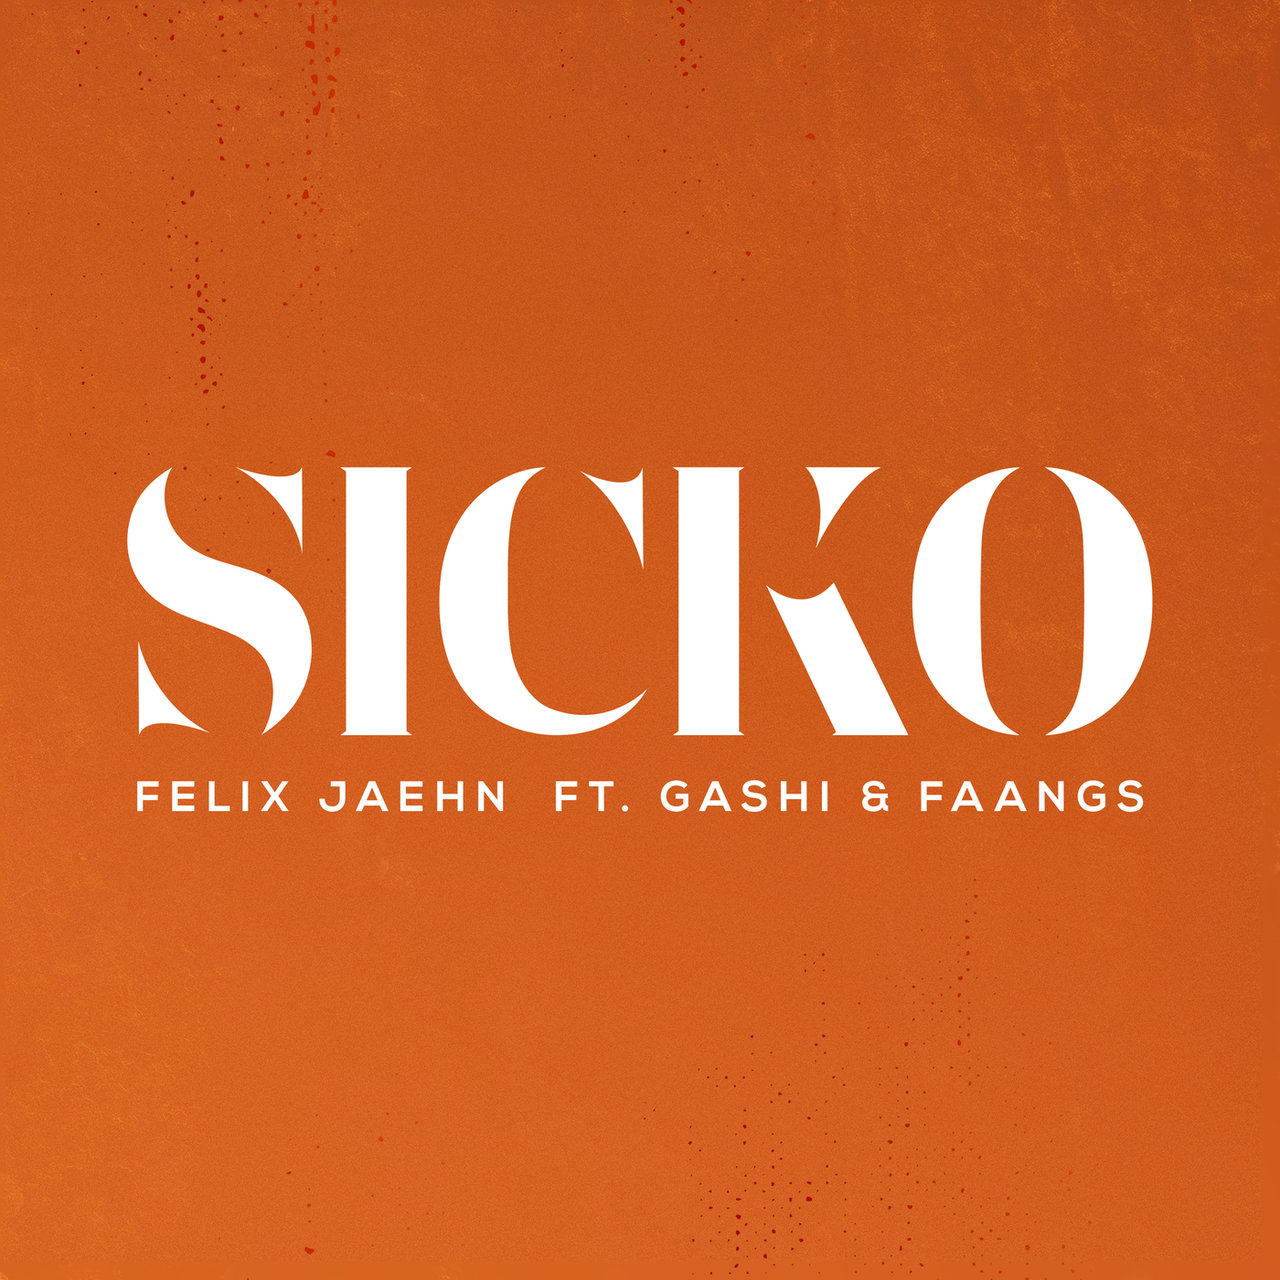 Felix Jaehn ft. featuring GASHI & FAANGS SICKO cover artwork